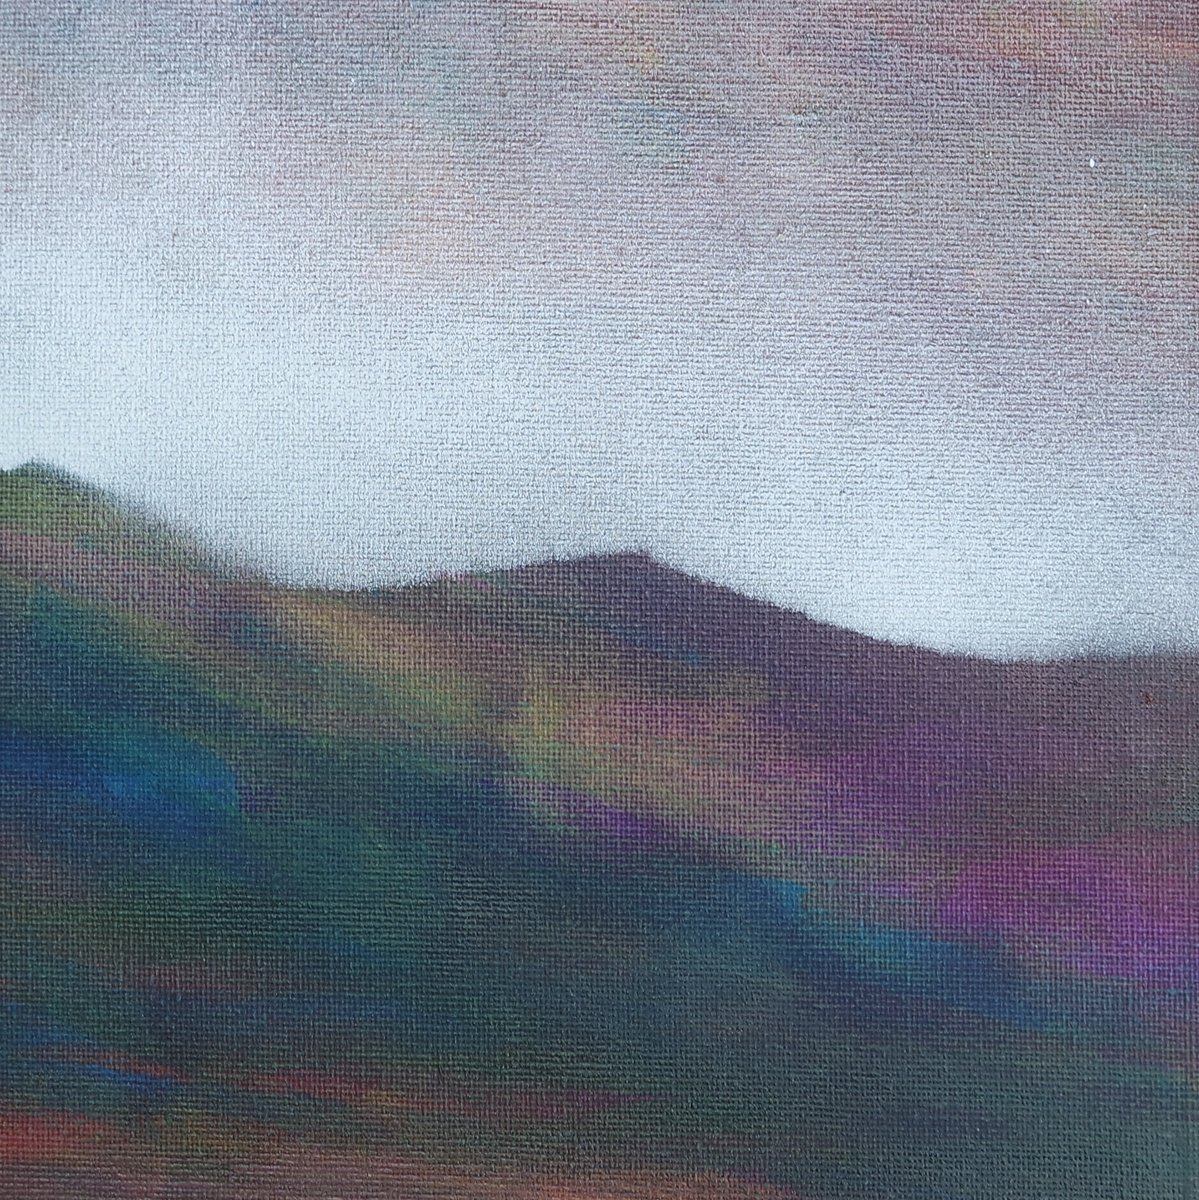 Highland Evening by Paul Edmondson